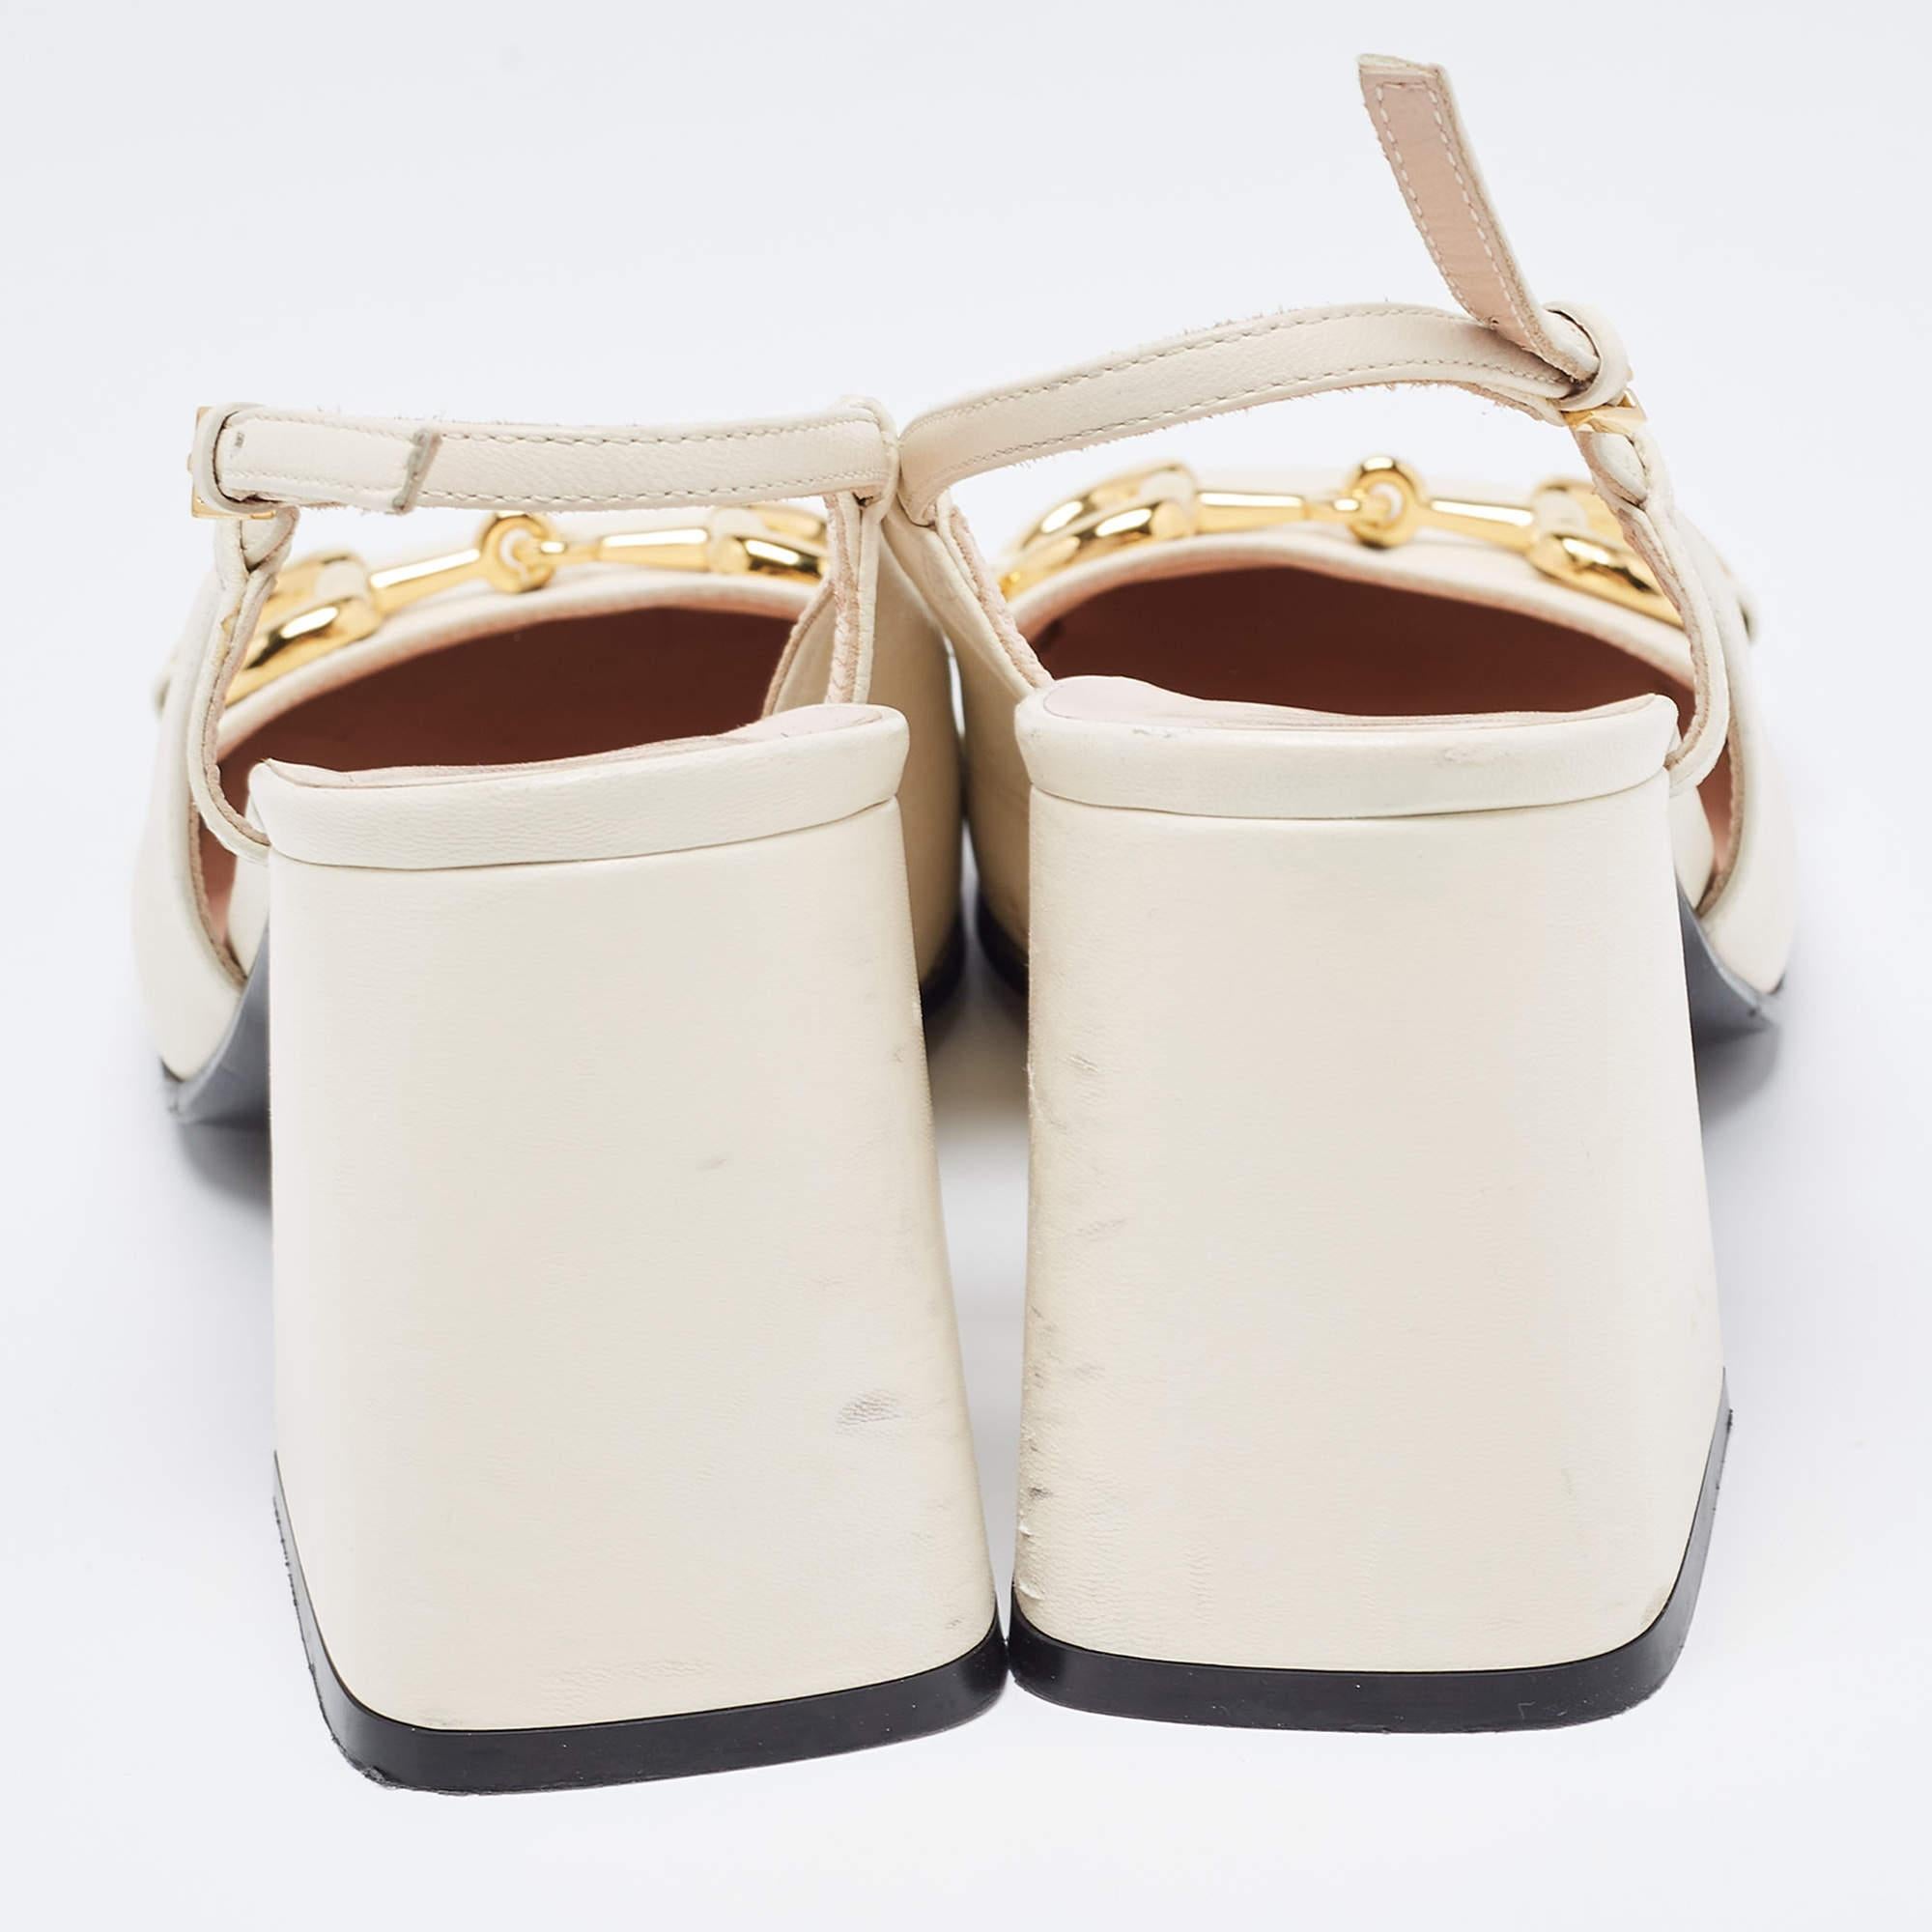 Gucci Cream Leather Horsebit Pumps Size 37.5 2